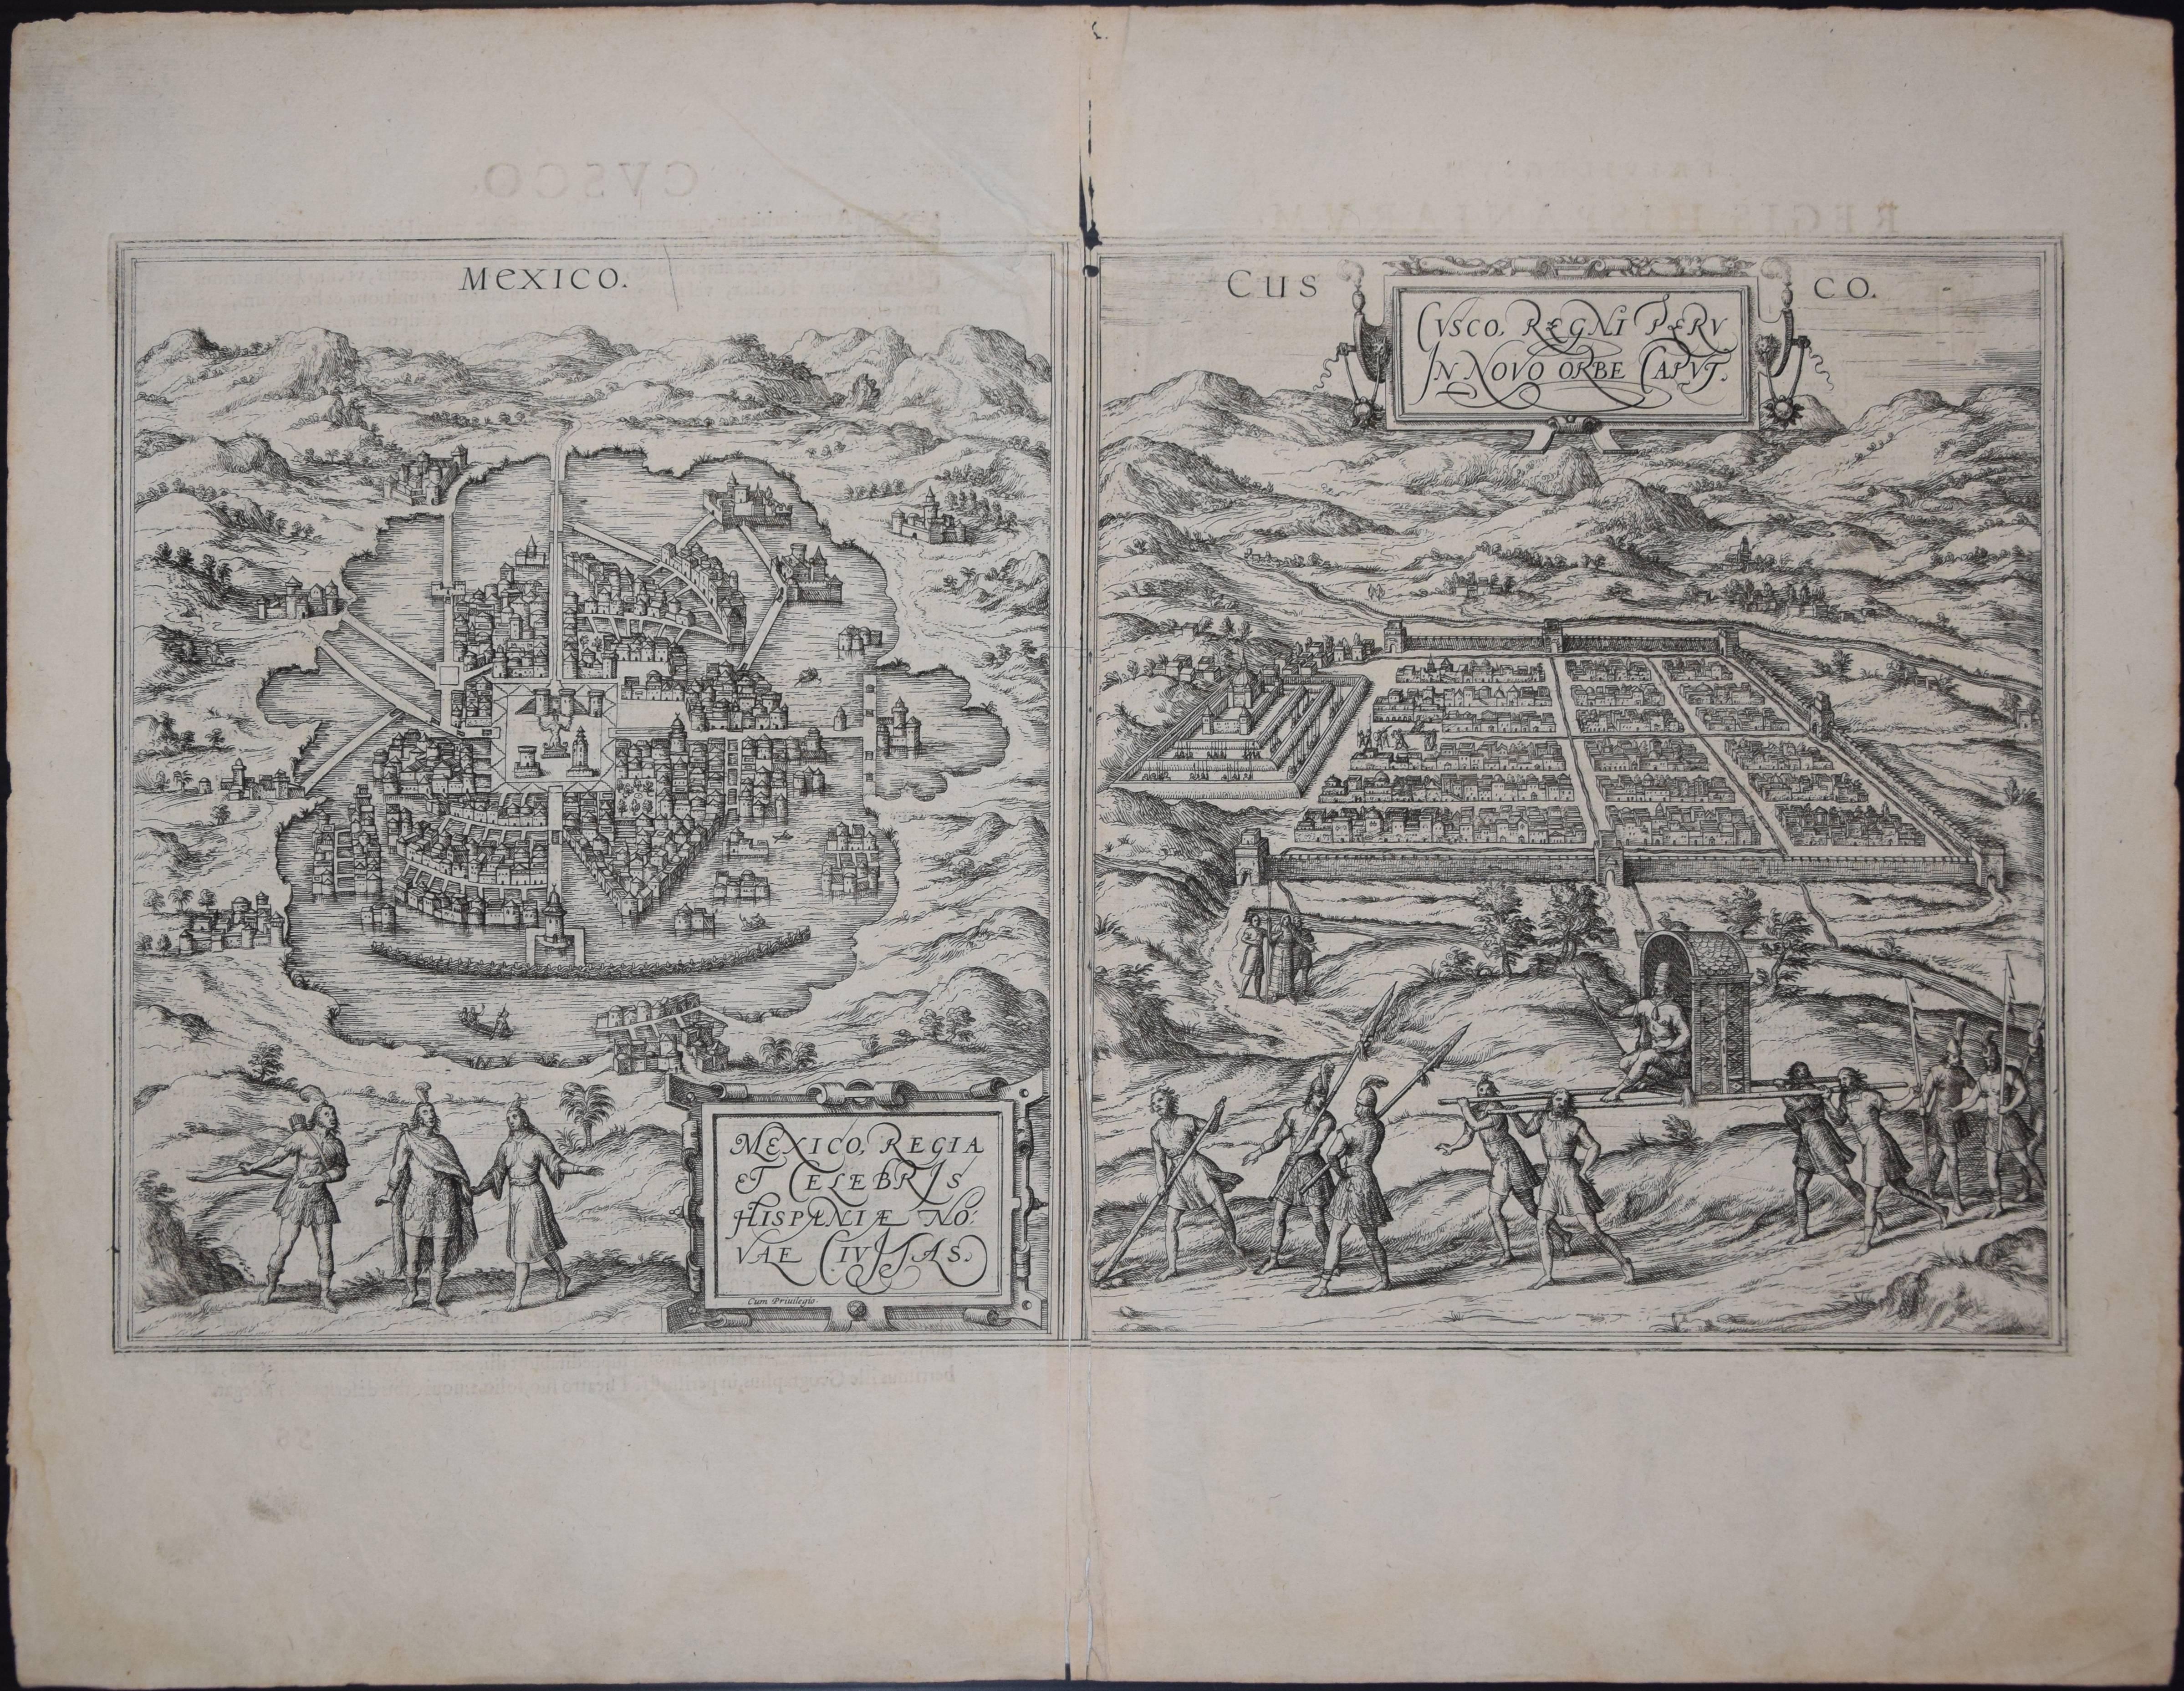 Frans Hogenberg Landscape Print - Mexico City & Cusco Antique Map, Civitates Orbis Terrarum by Braun & Hogenberg